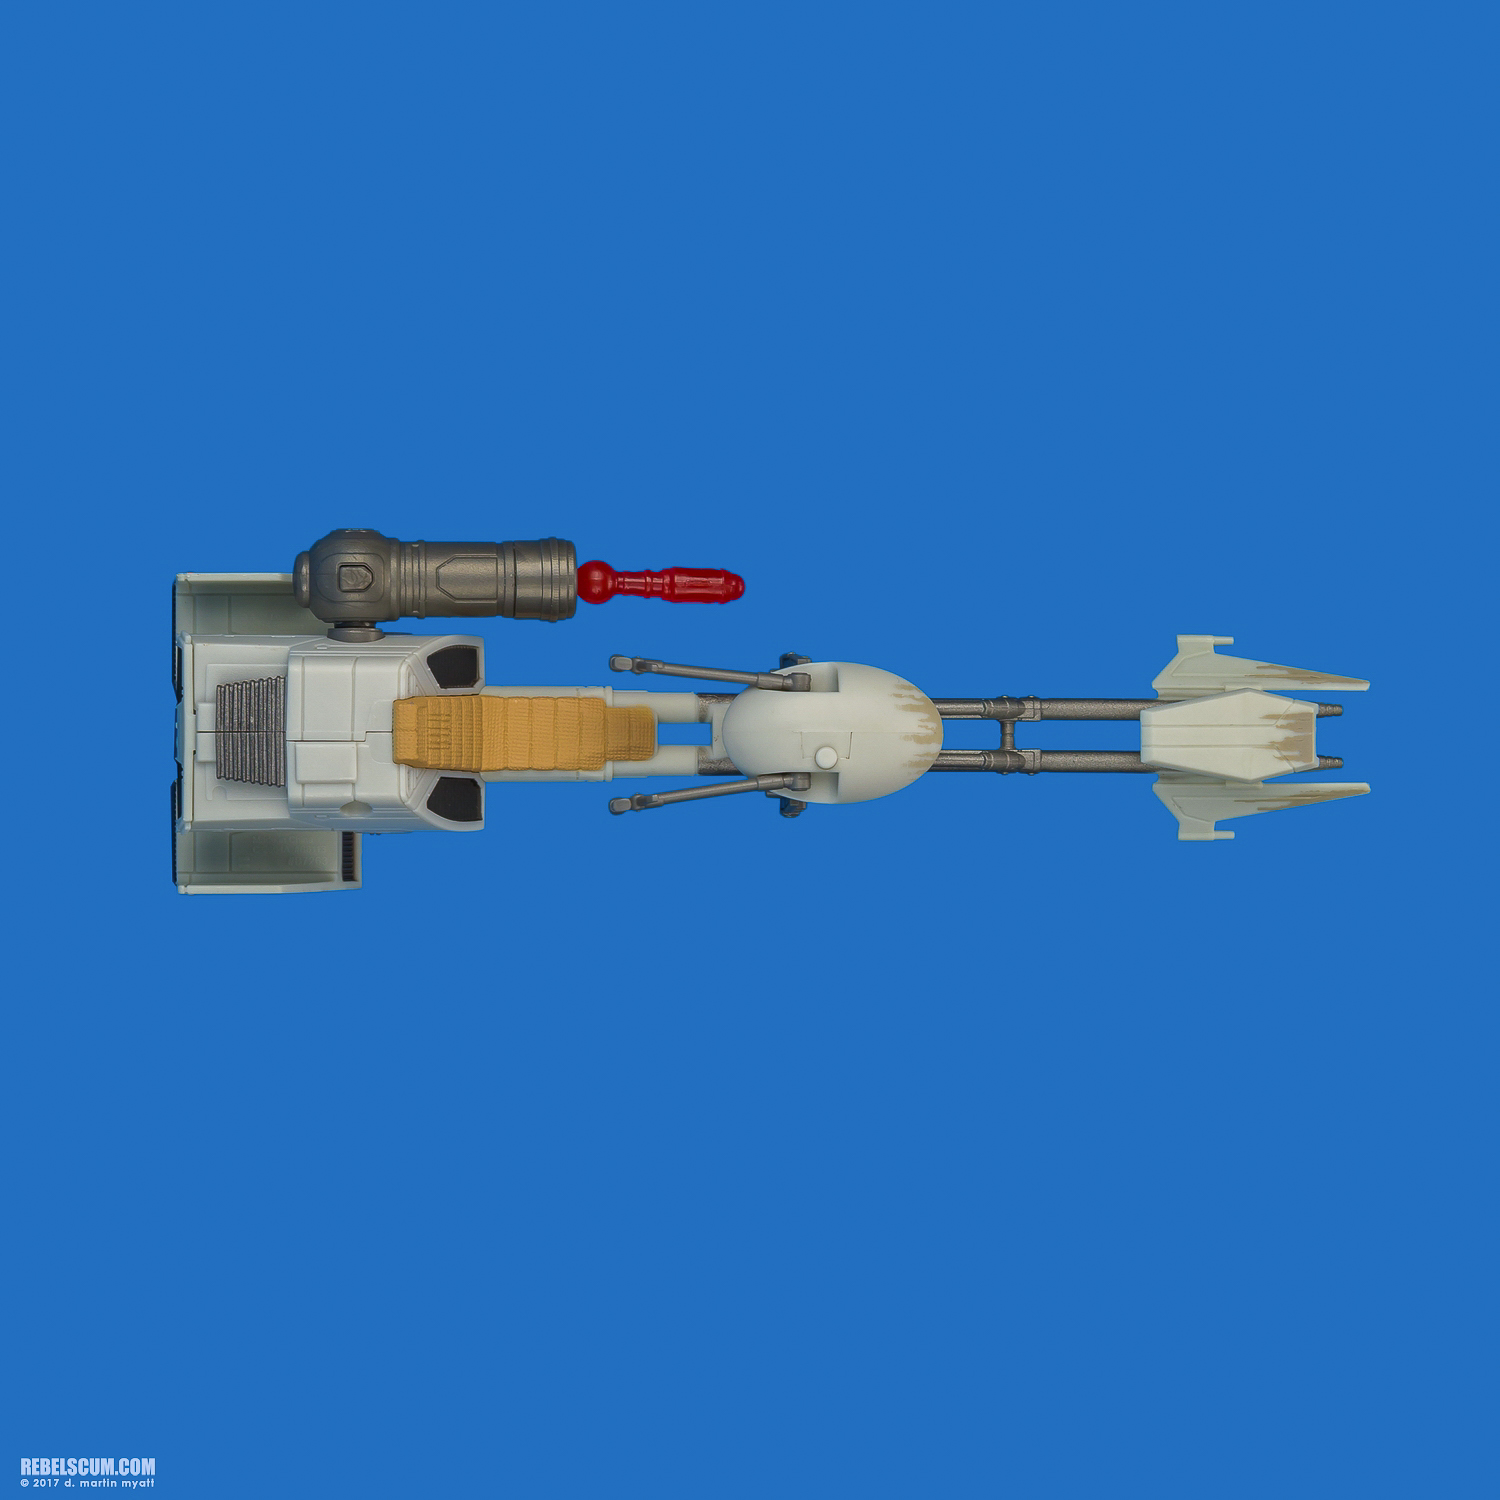 Imperial-Speeder-Rogue-One-B7263-B3716-005.jpg